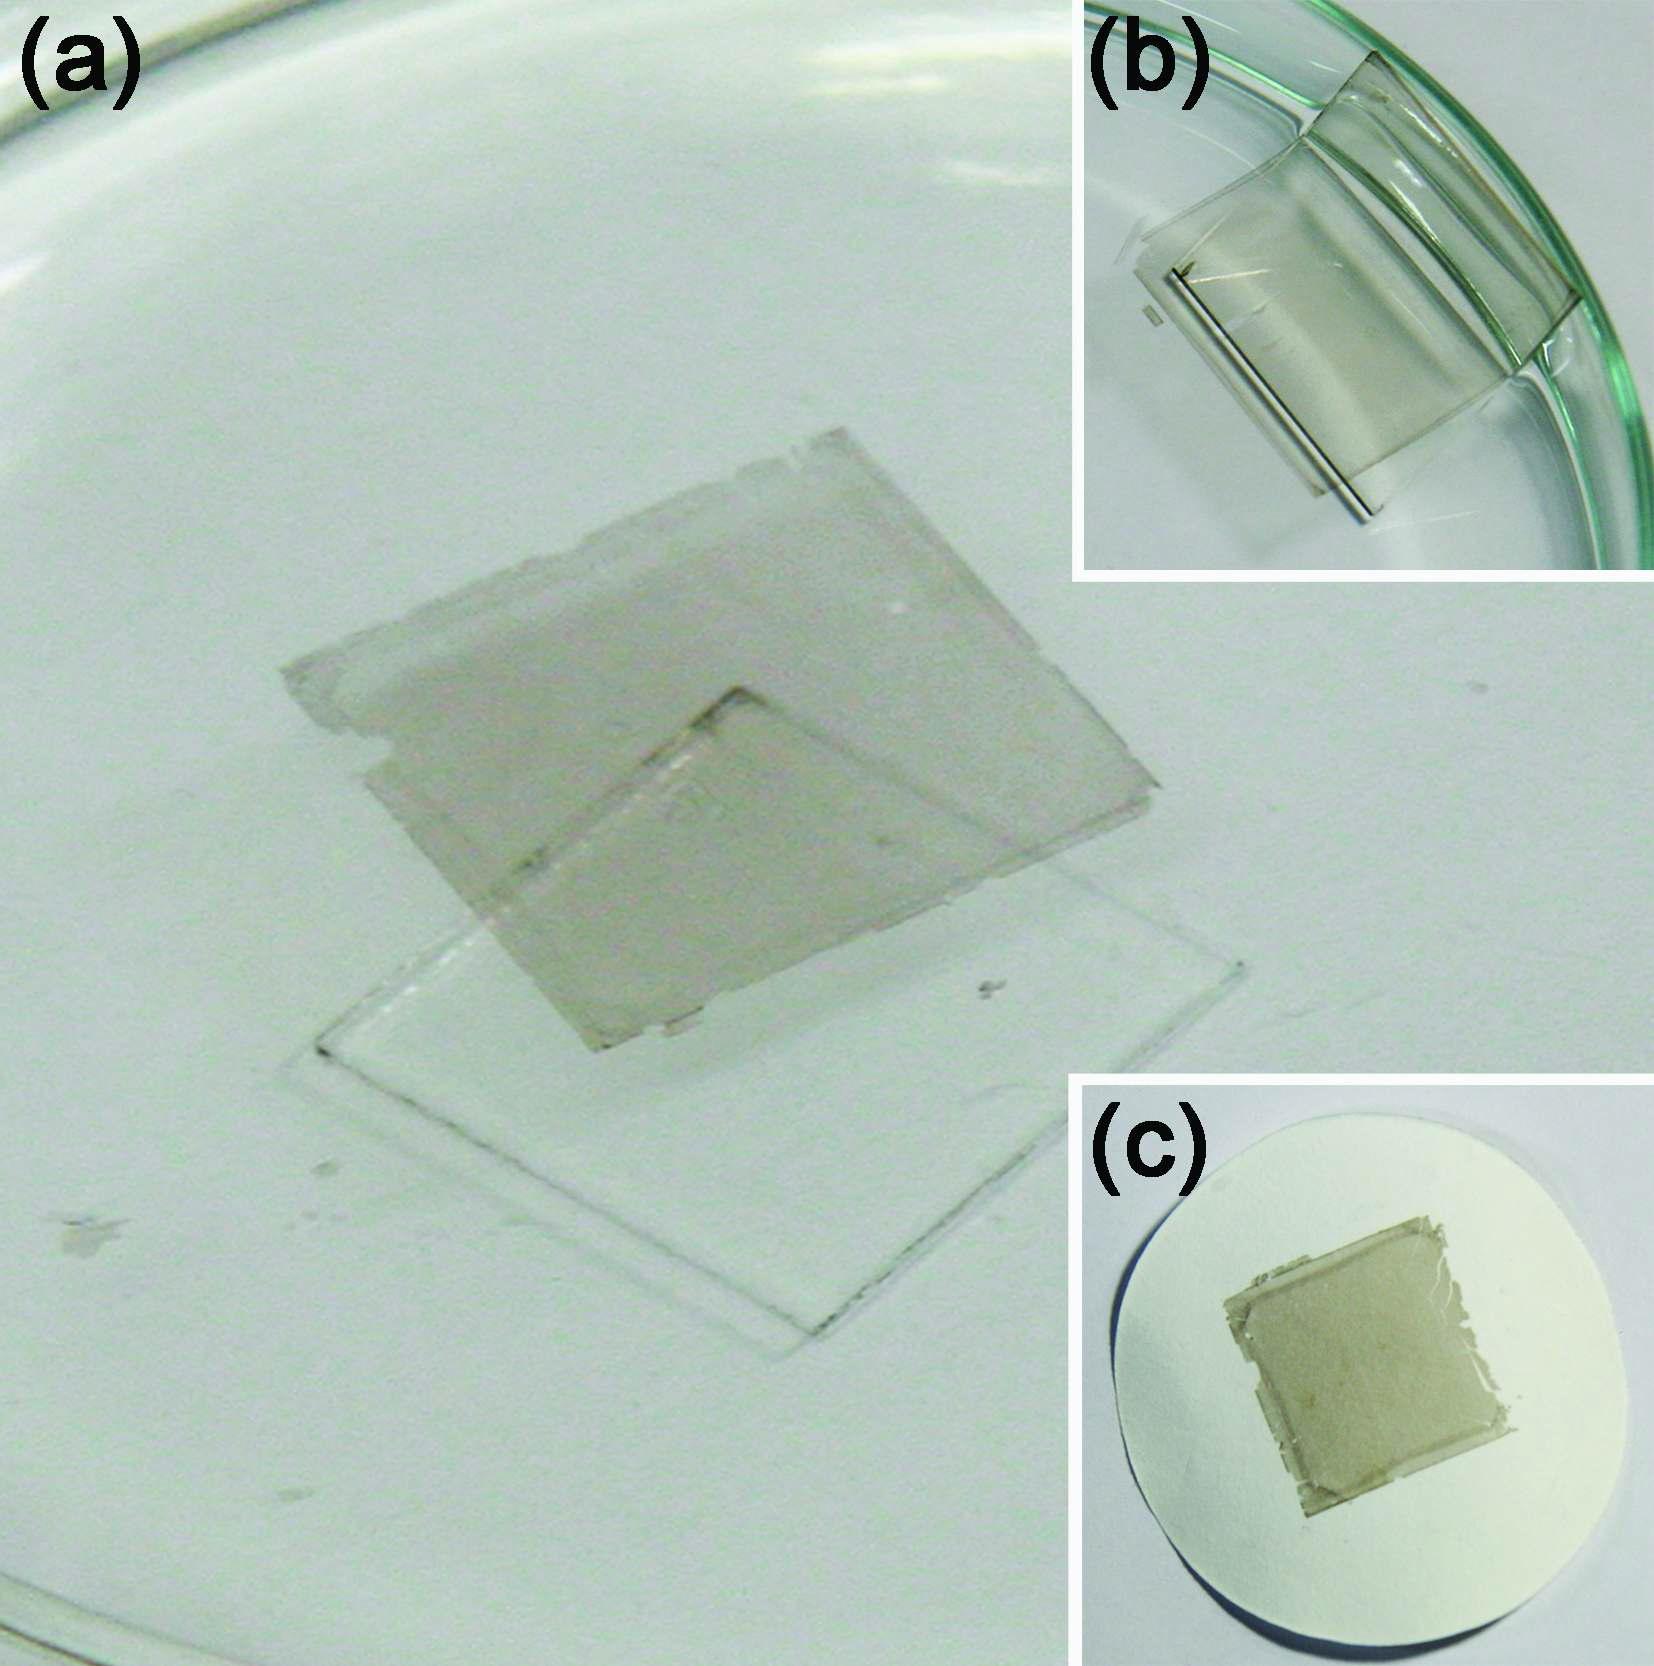 Free-standing 박막 형성: (a) 수면 위에 떠 있는 SWCNT 박막, (b) 유리로부터 분리되는 박막, (c) filter paper로 옮긴 박막.